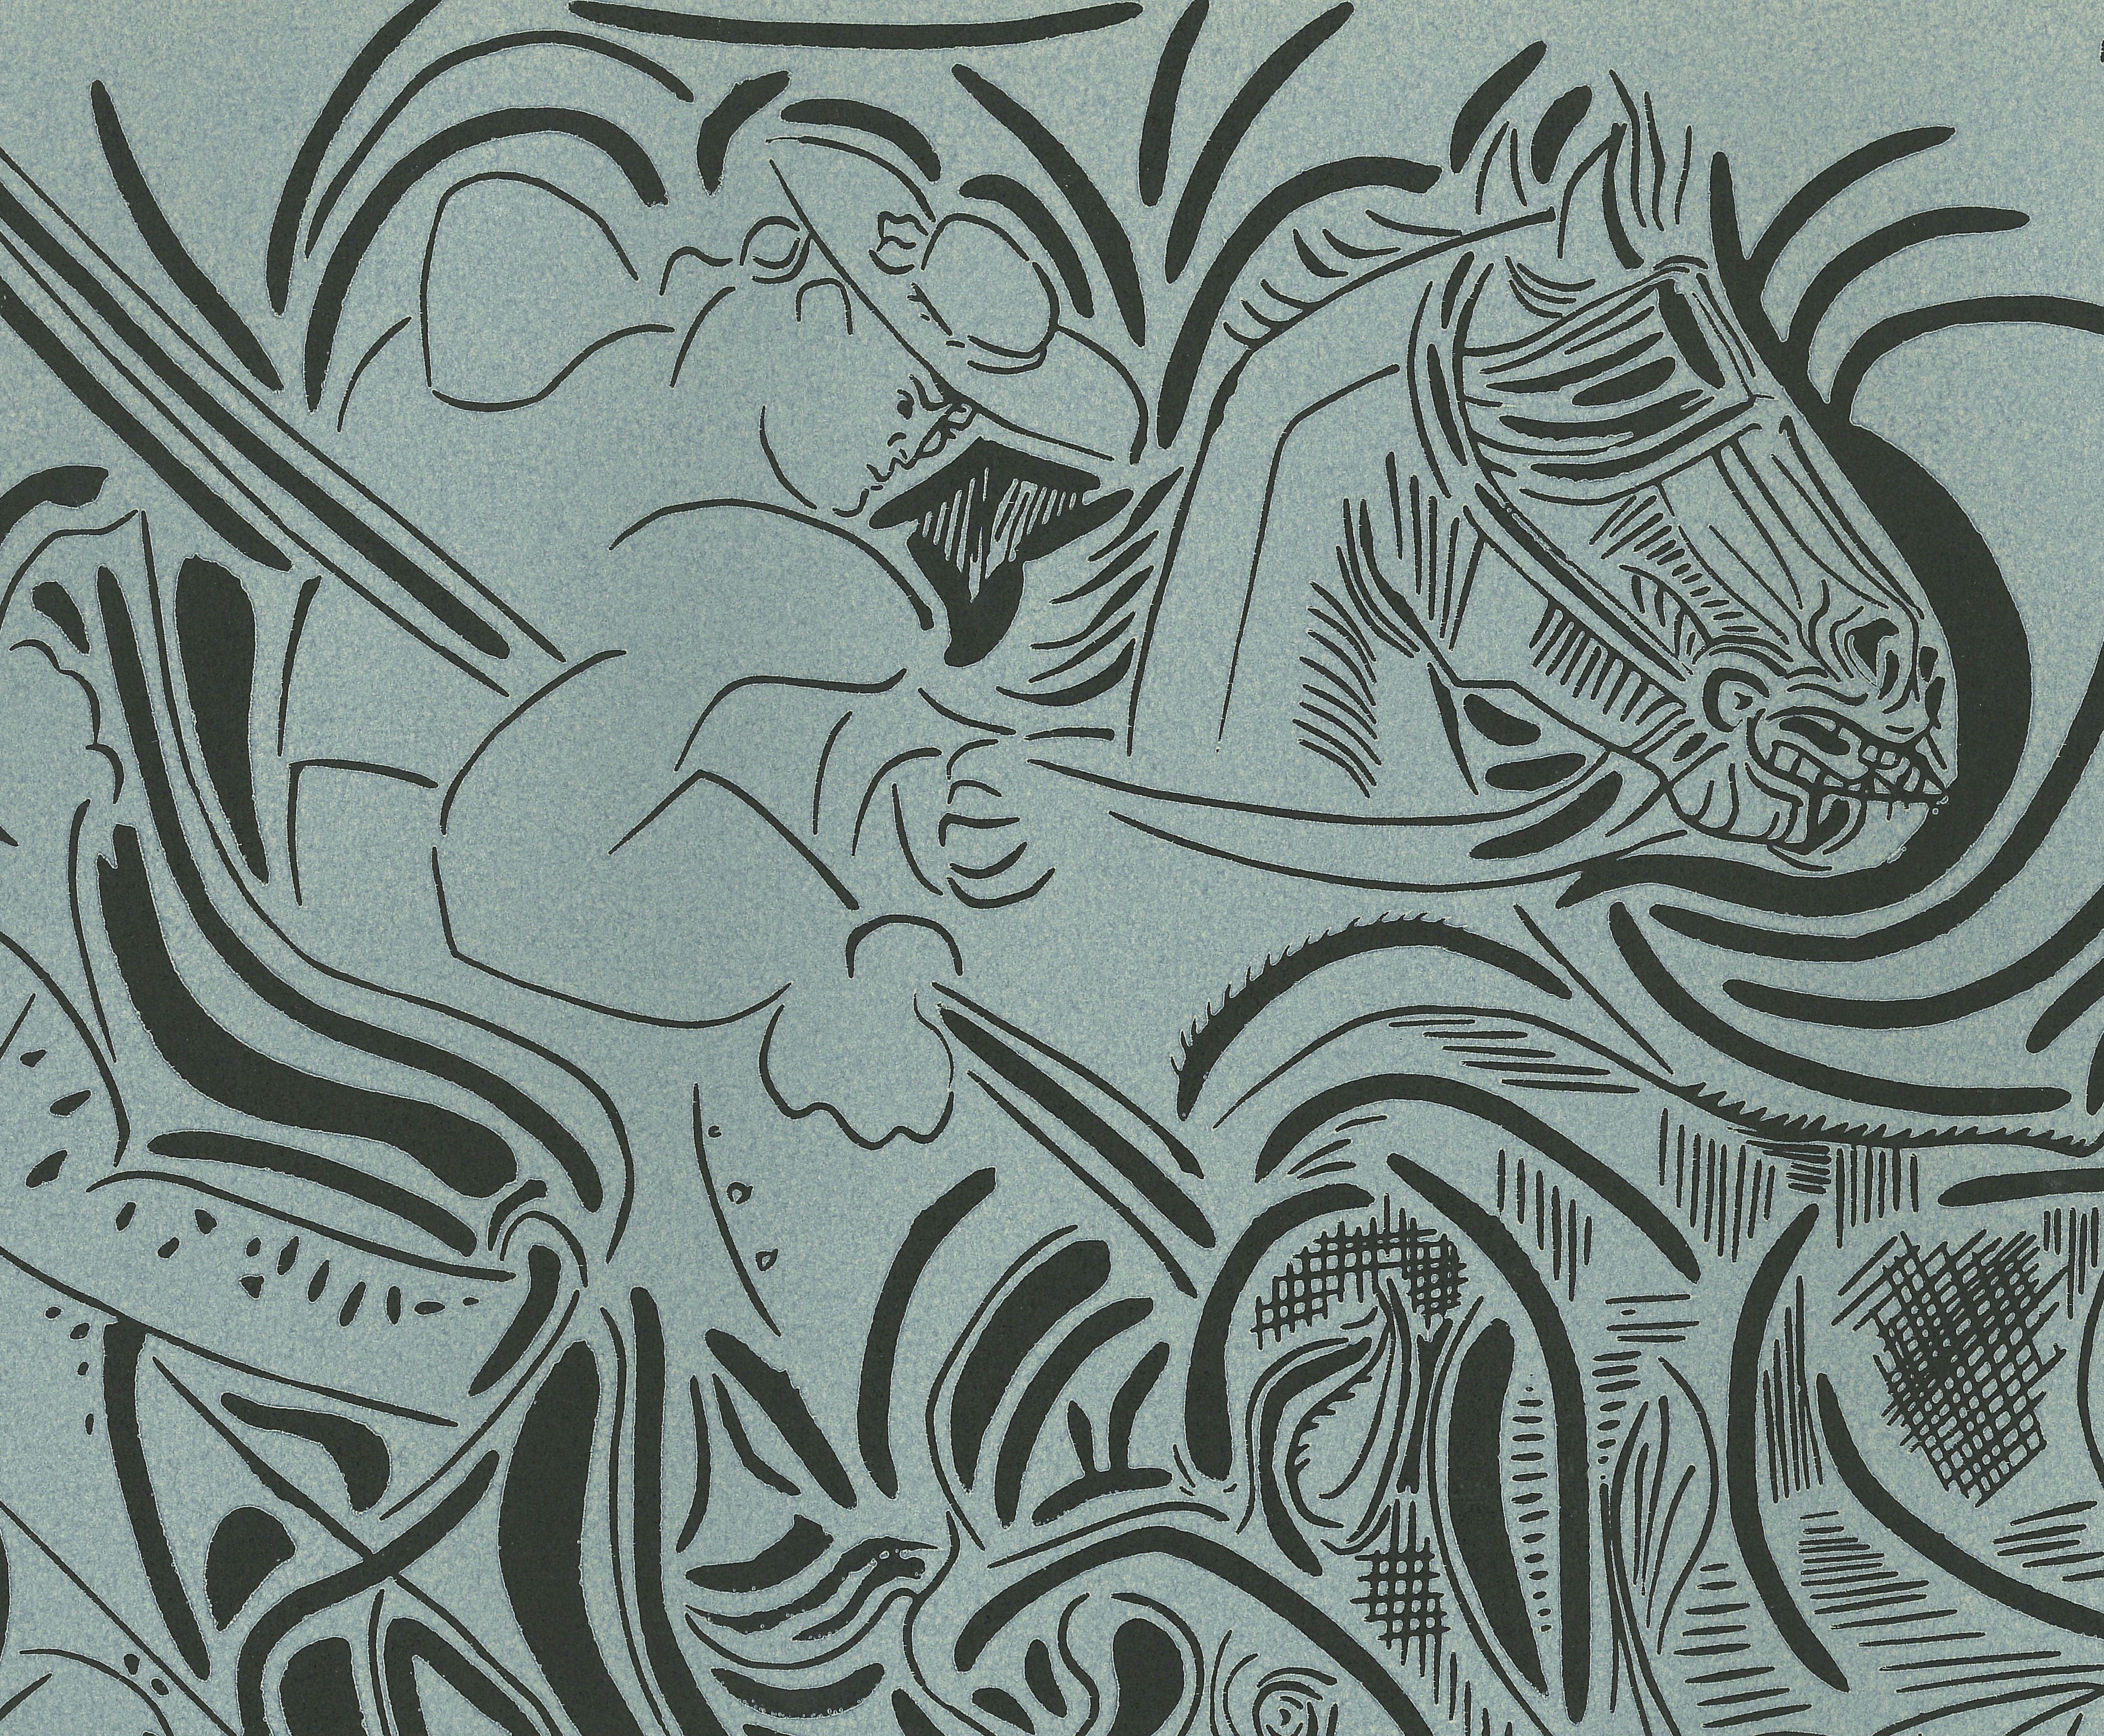 La Pique - Original Linocut nach Pablo Picasso - 1962 (Kubismus), Print, von (after) Pablo Picasso